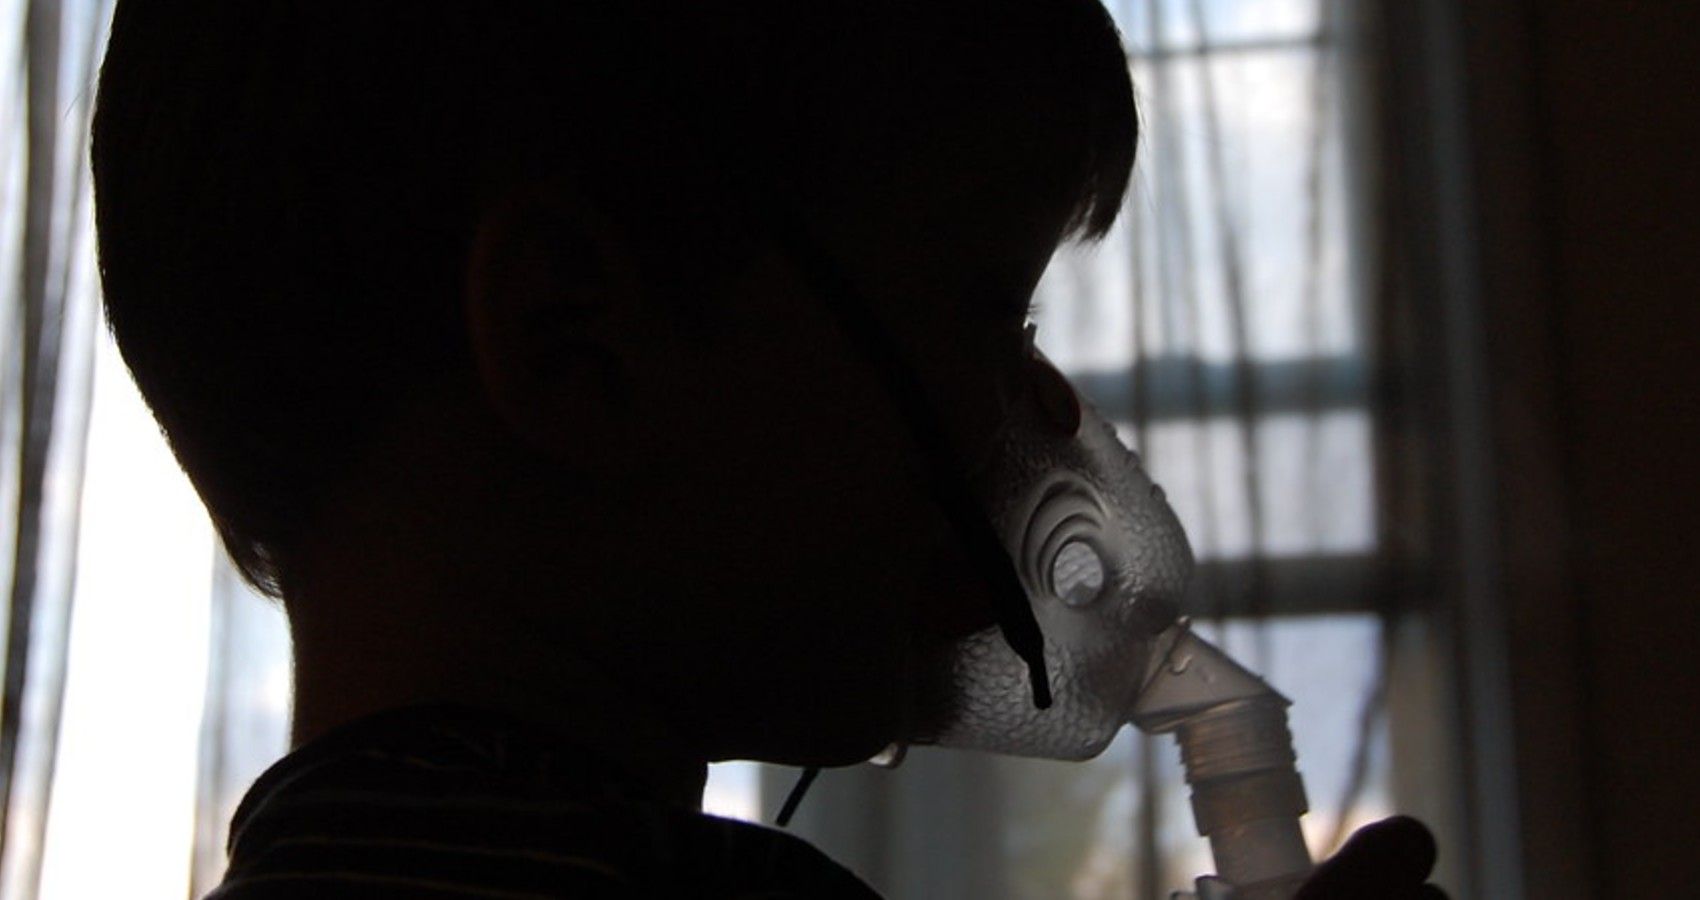 A child using an asthma inhaler on mouth